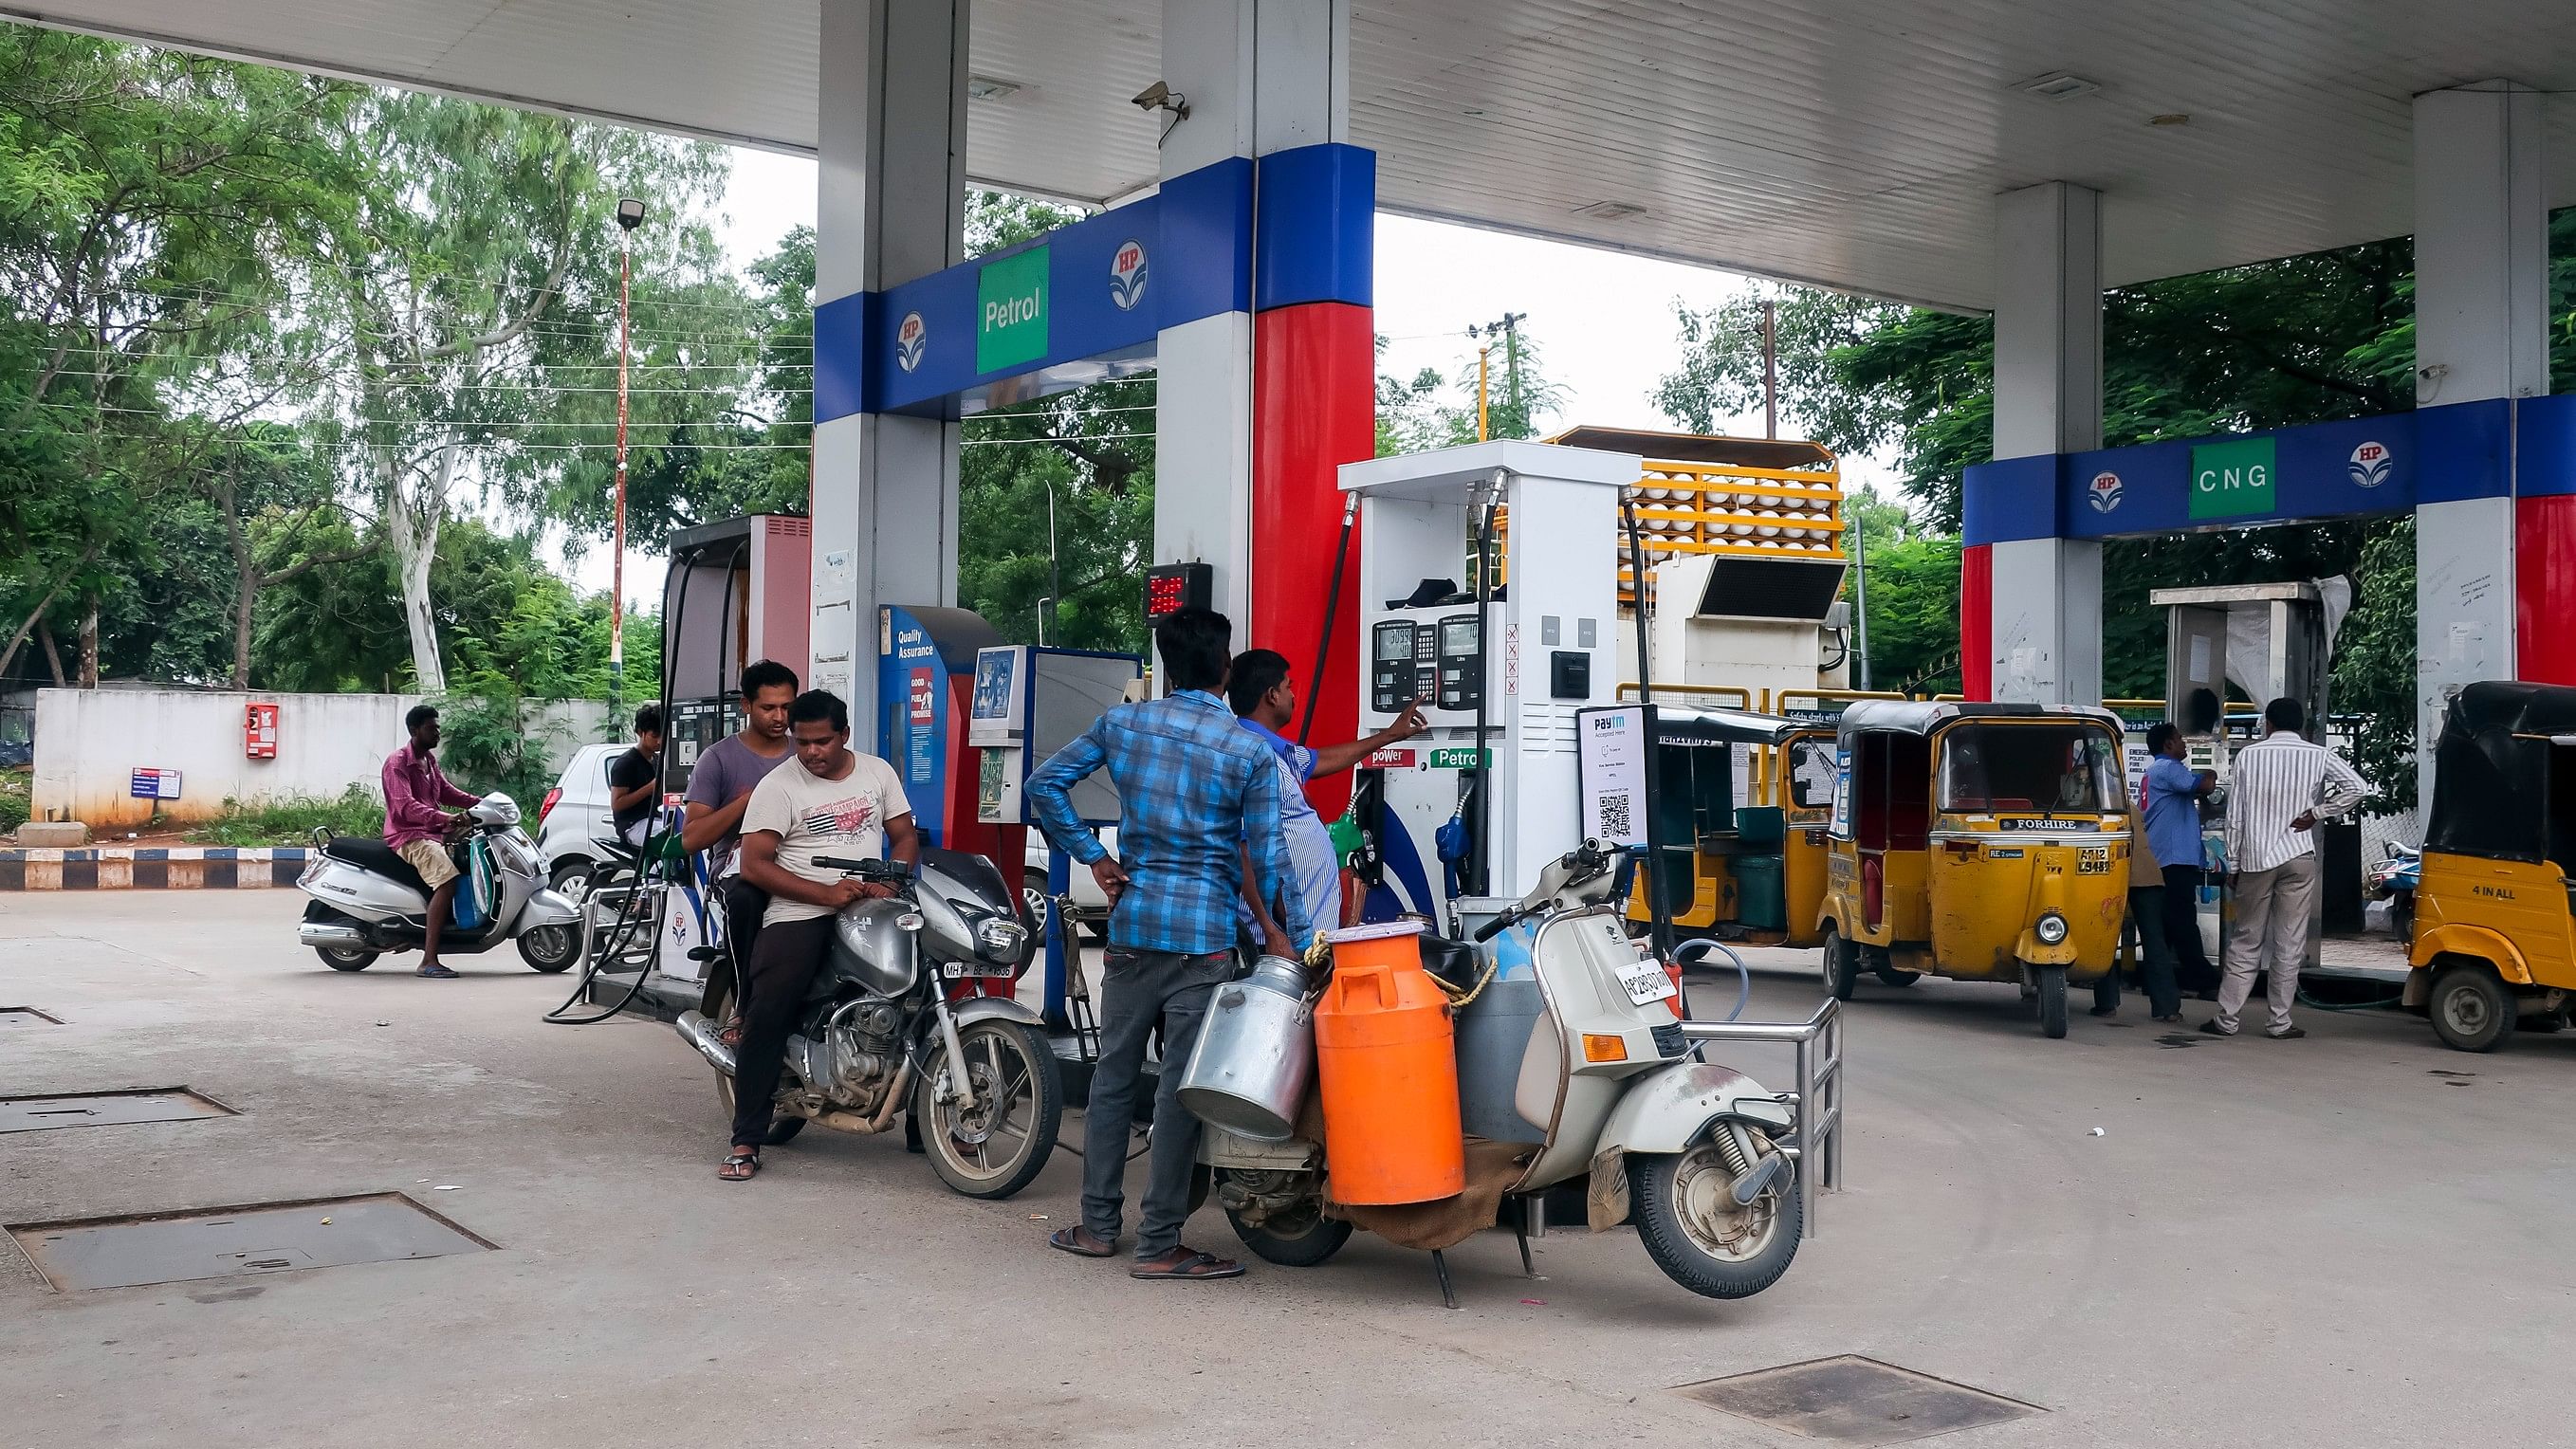 <div class="paragraphs"><p>A fuel pump in India.</p></div>